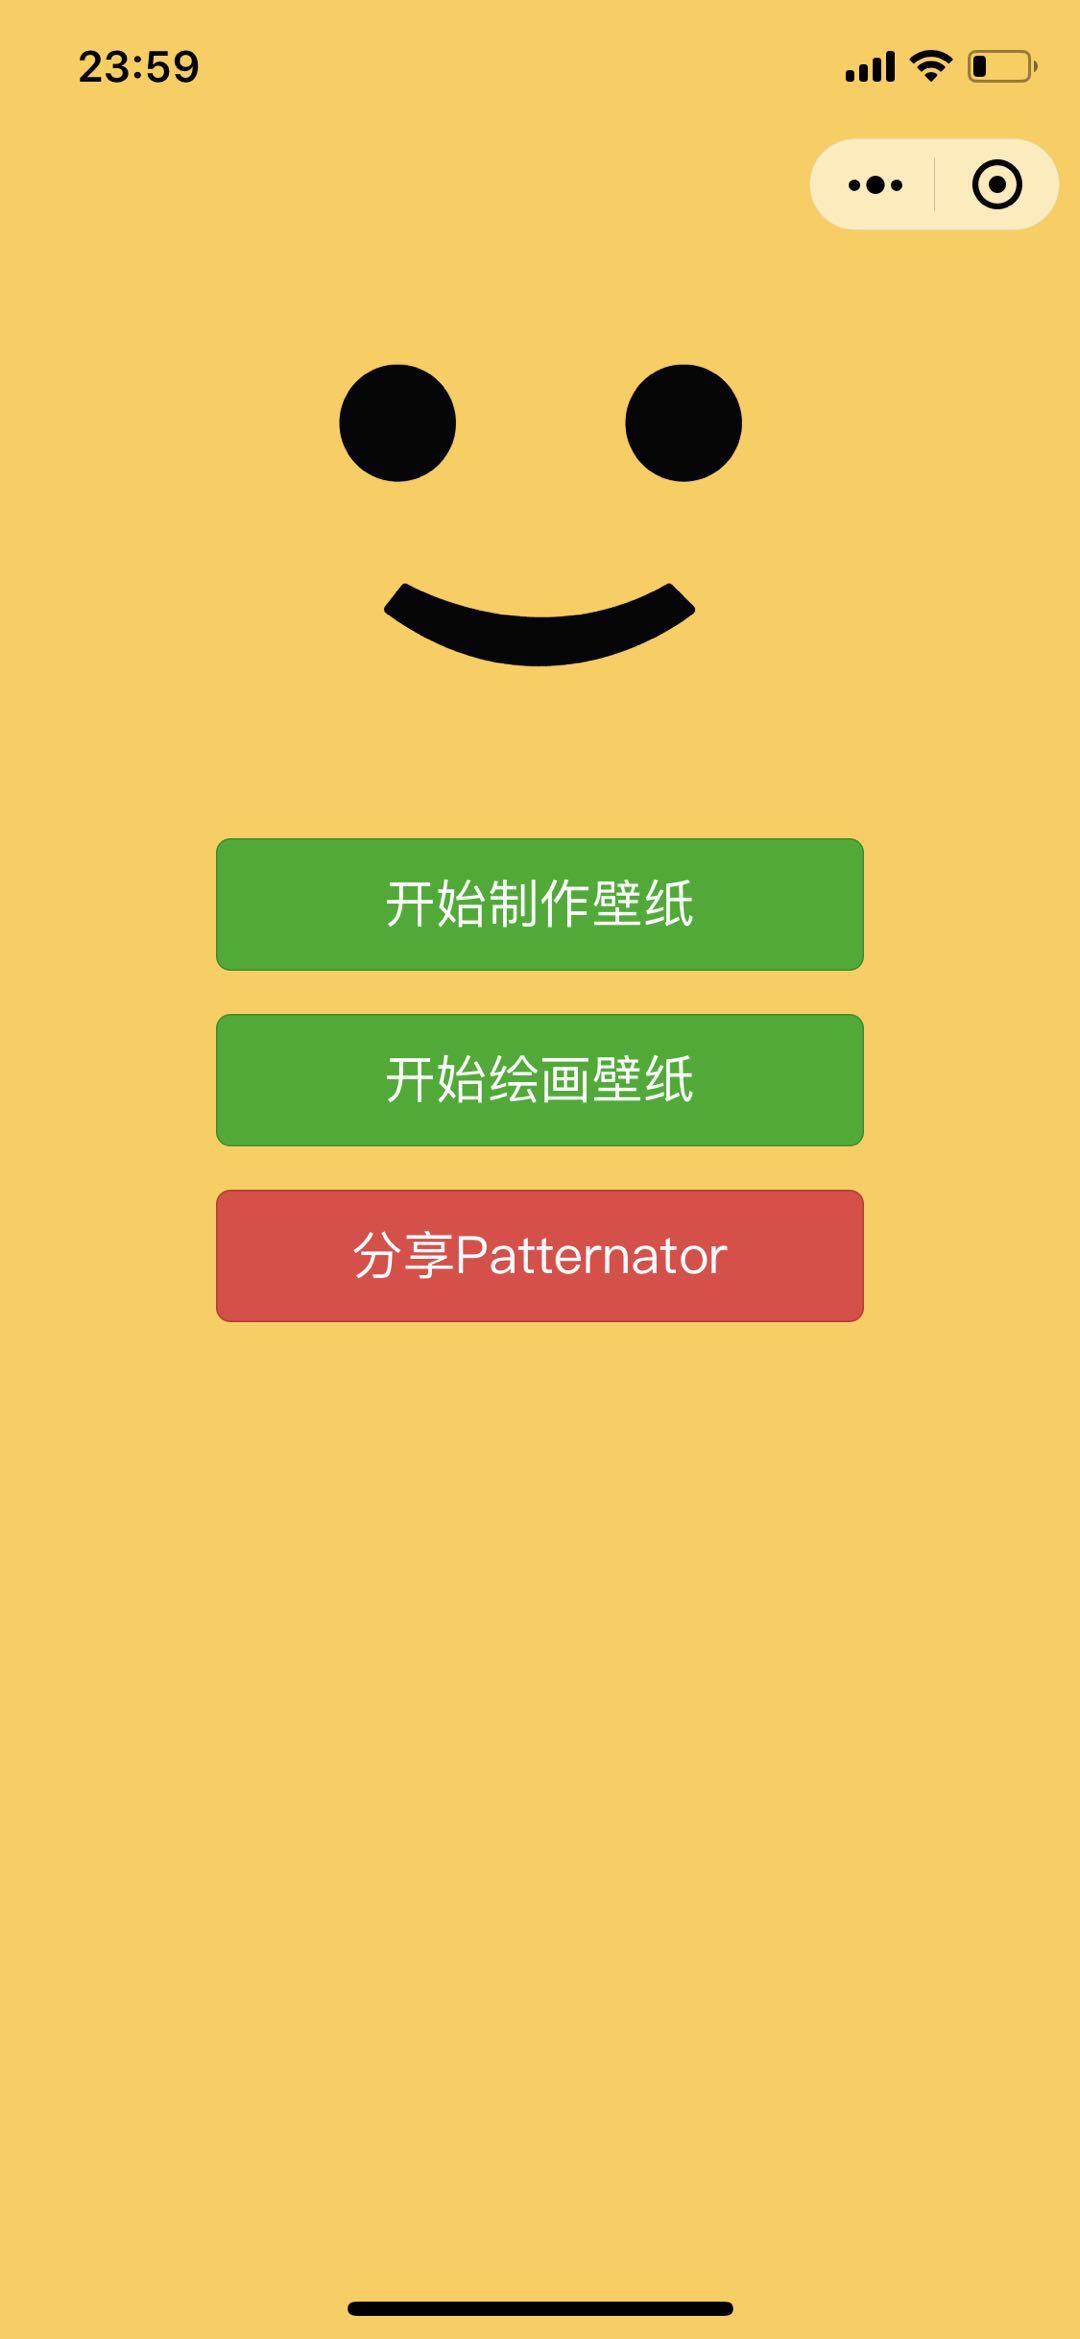 Patternator